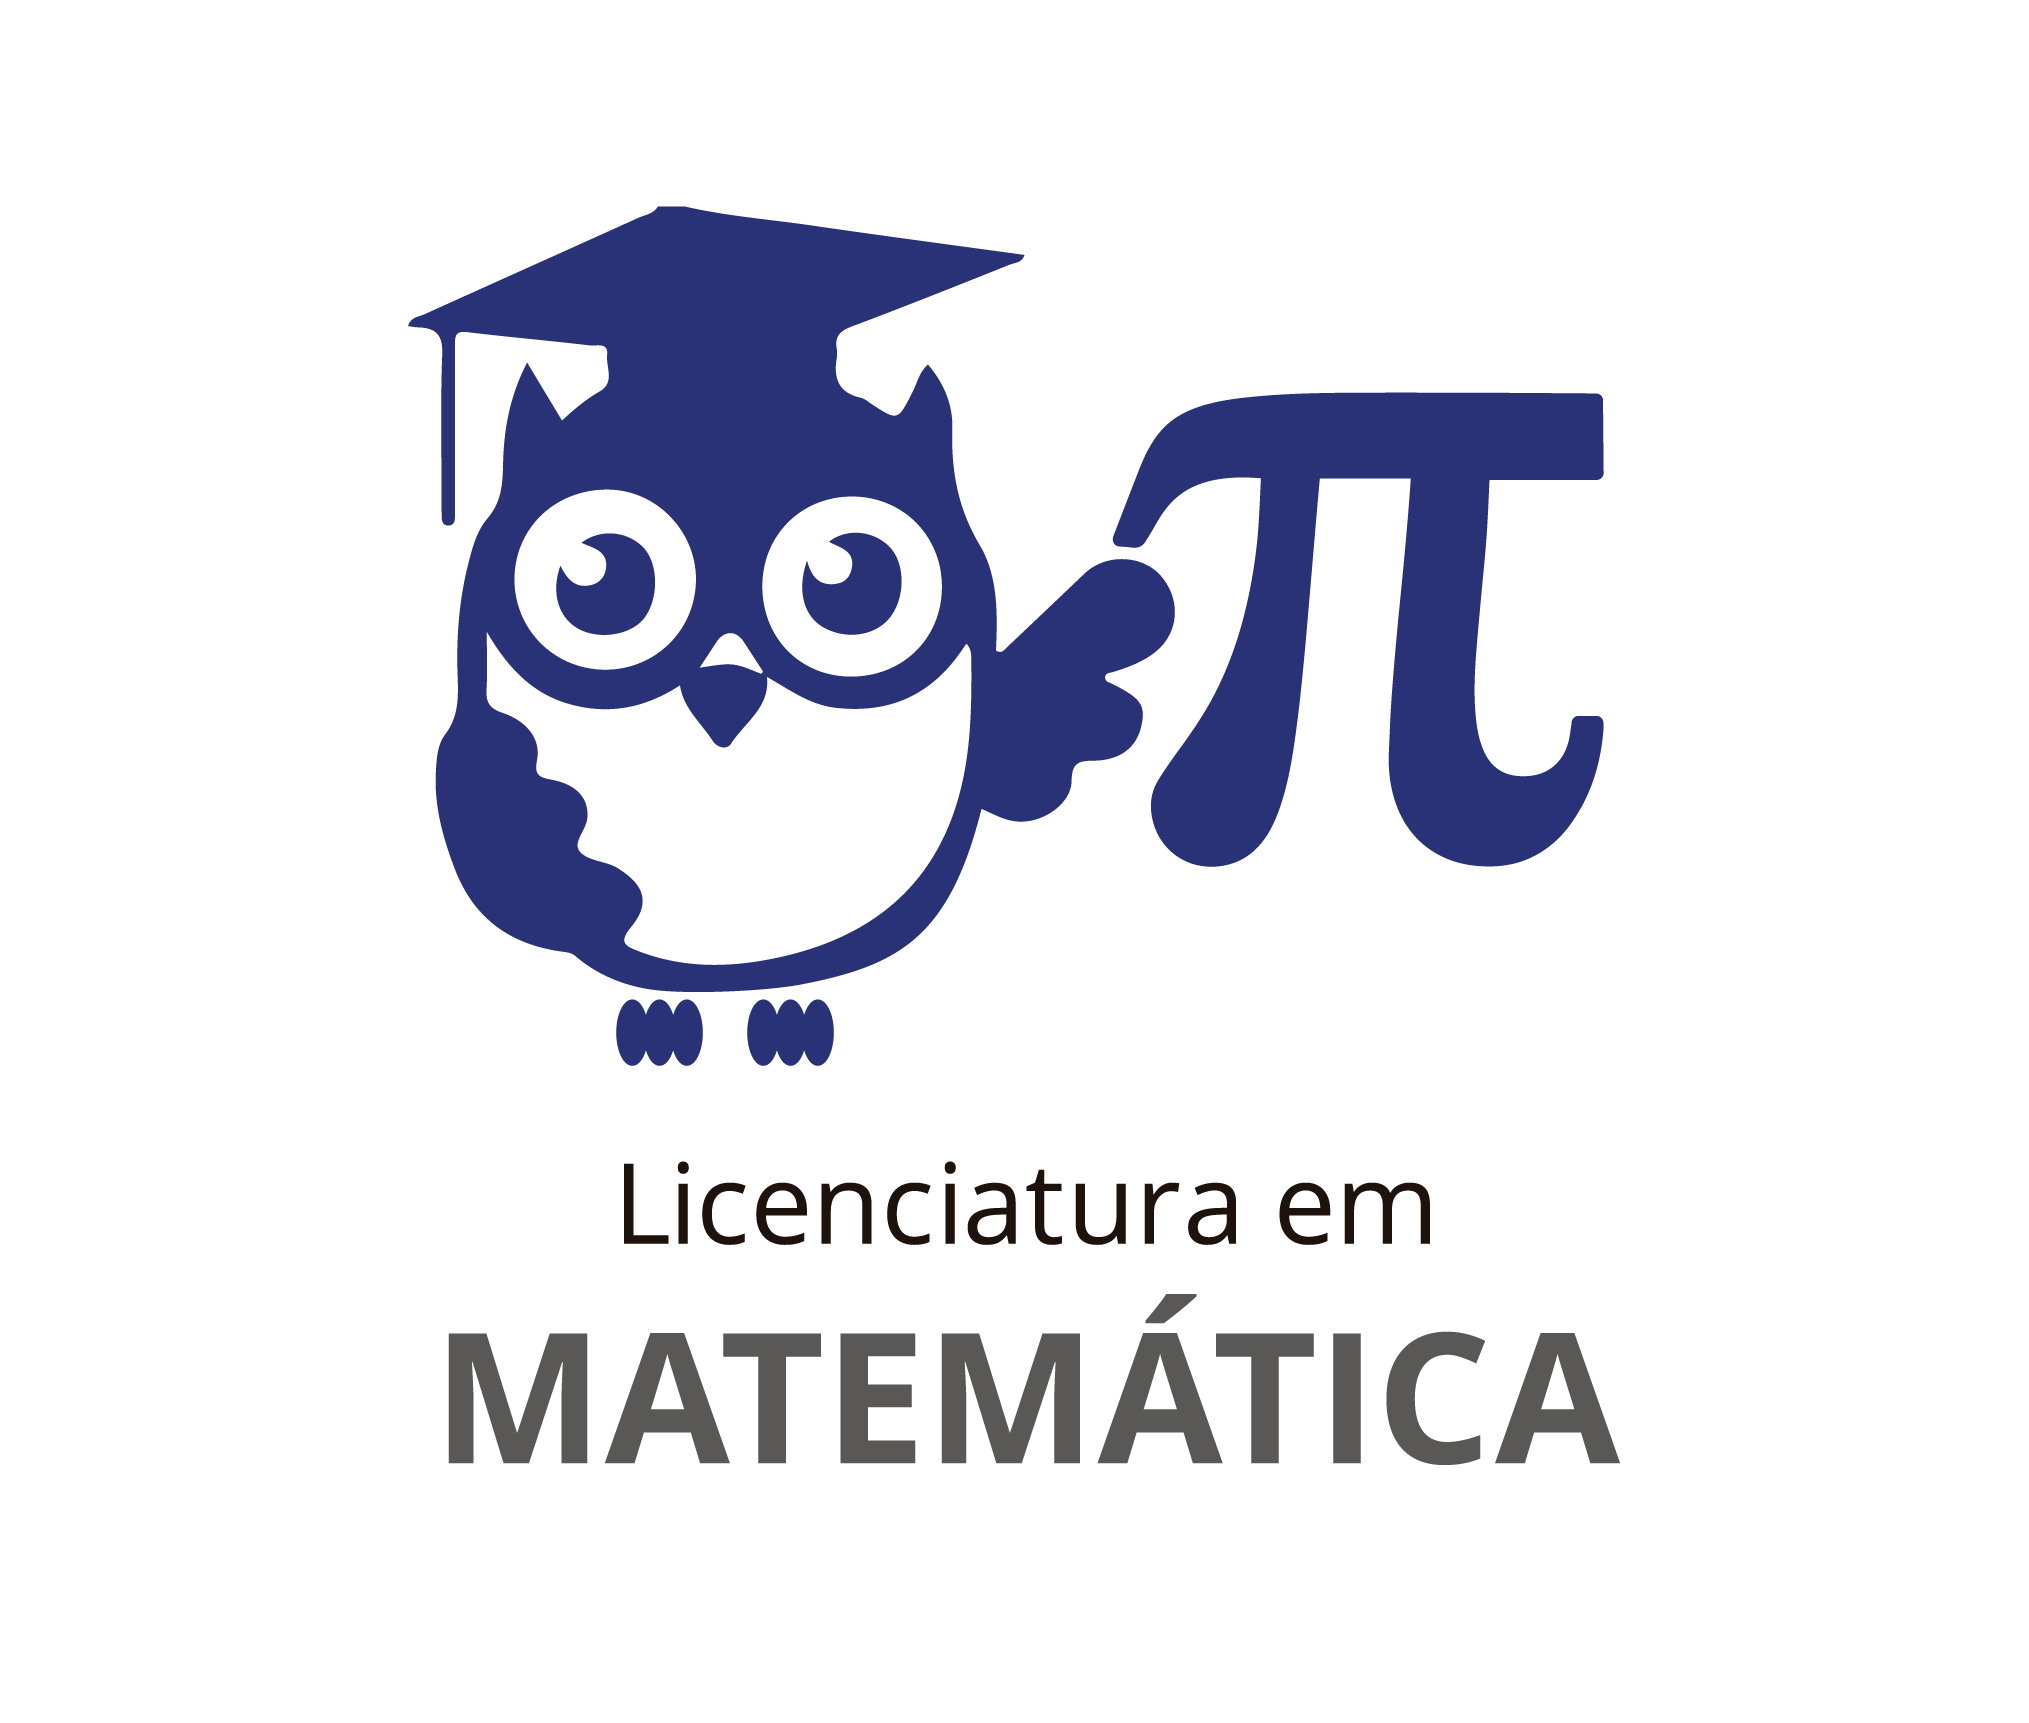 matemática - Matemática